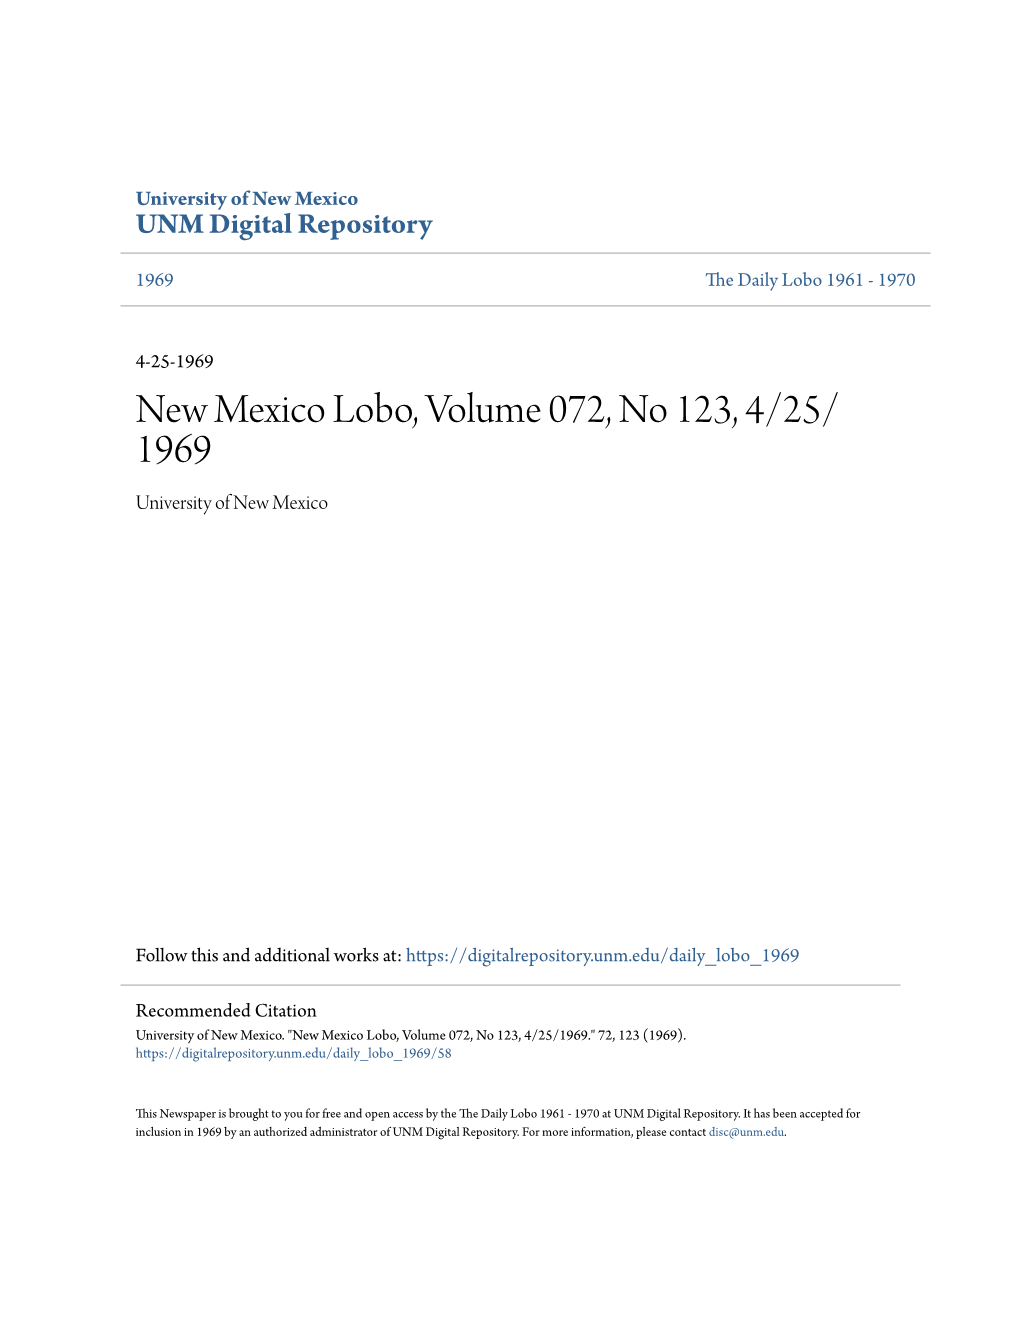 New Mexico Lobo, Volume 072, No 123, 4/25/1969." 72, 123 (1969)